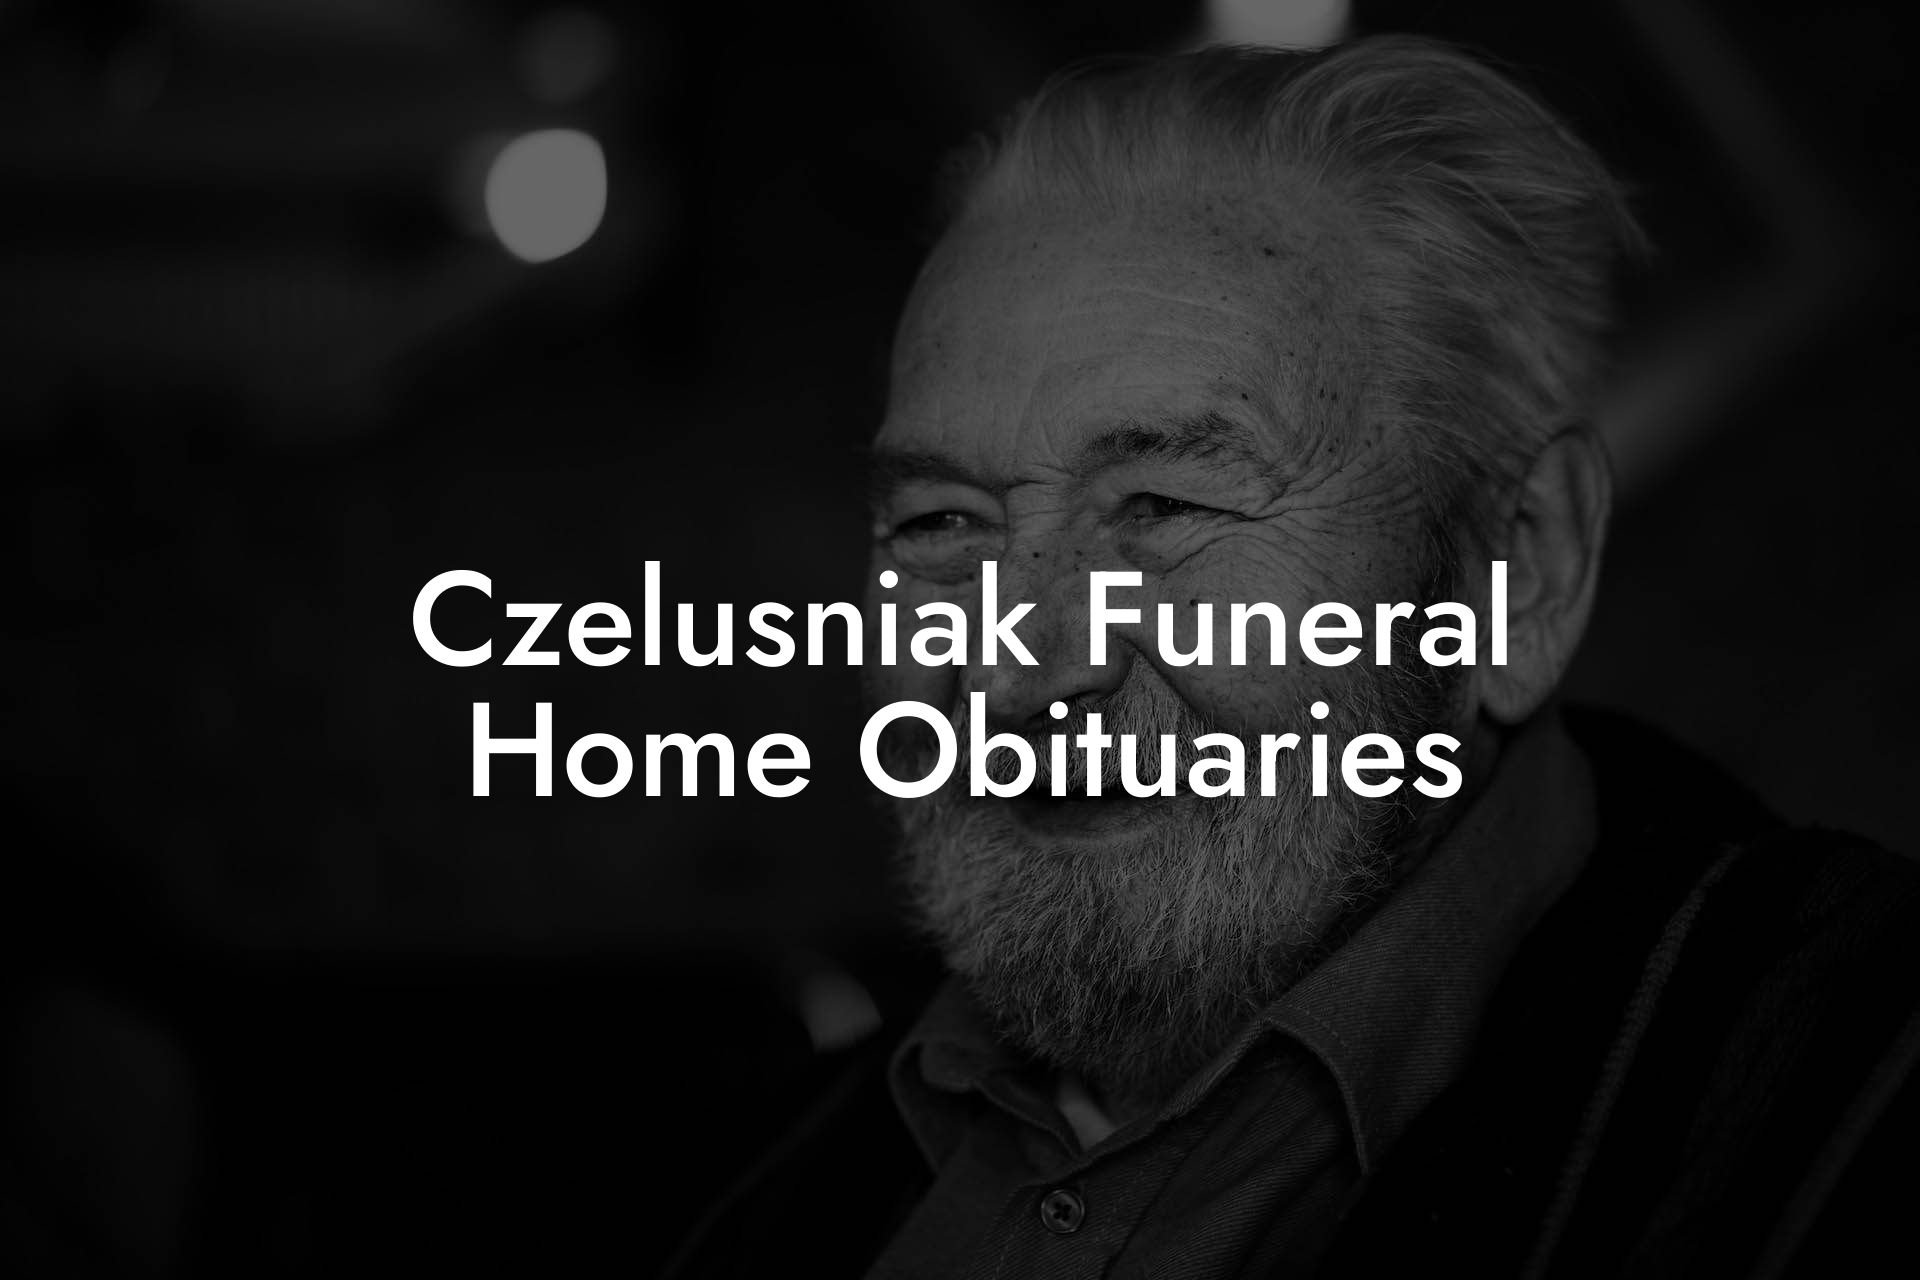 Czelusniak Funeral Home Obituaries